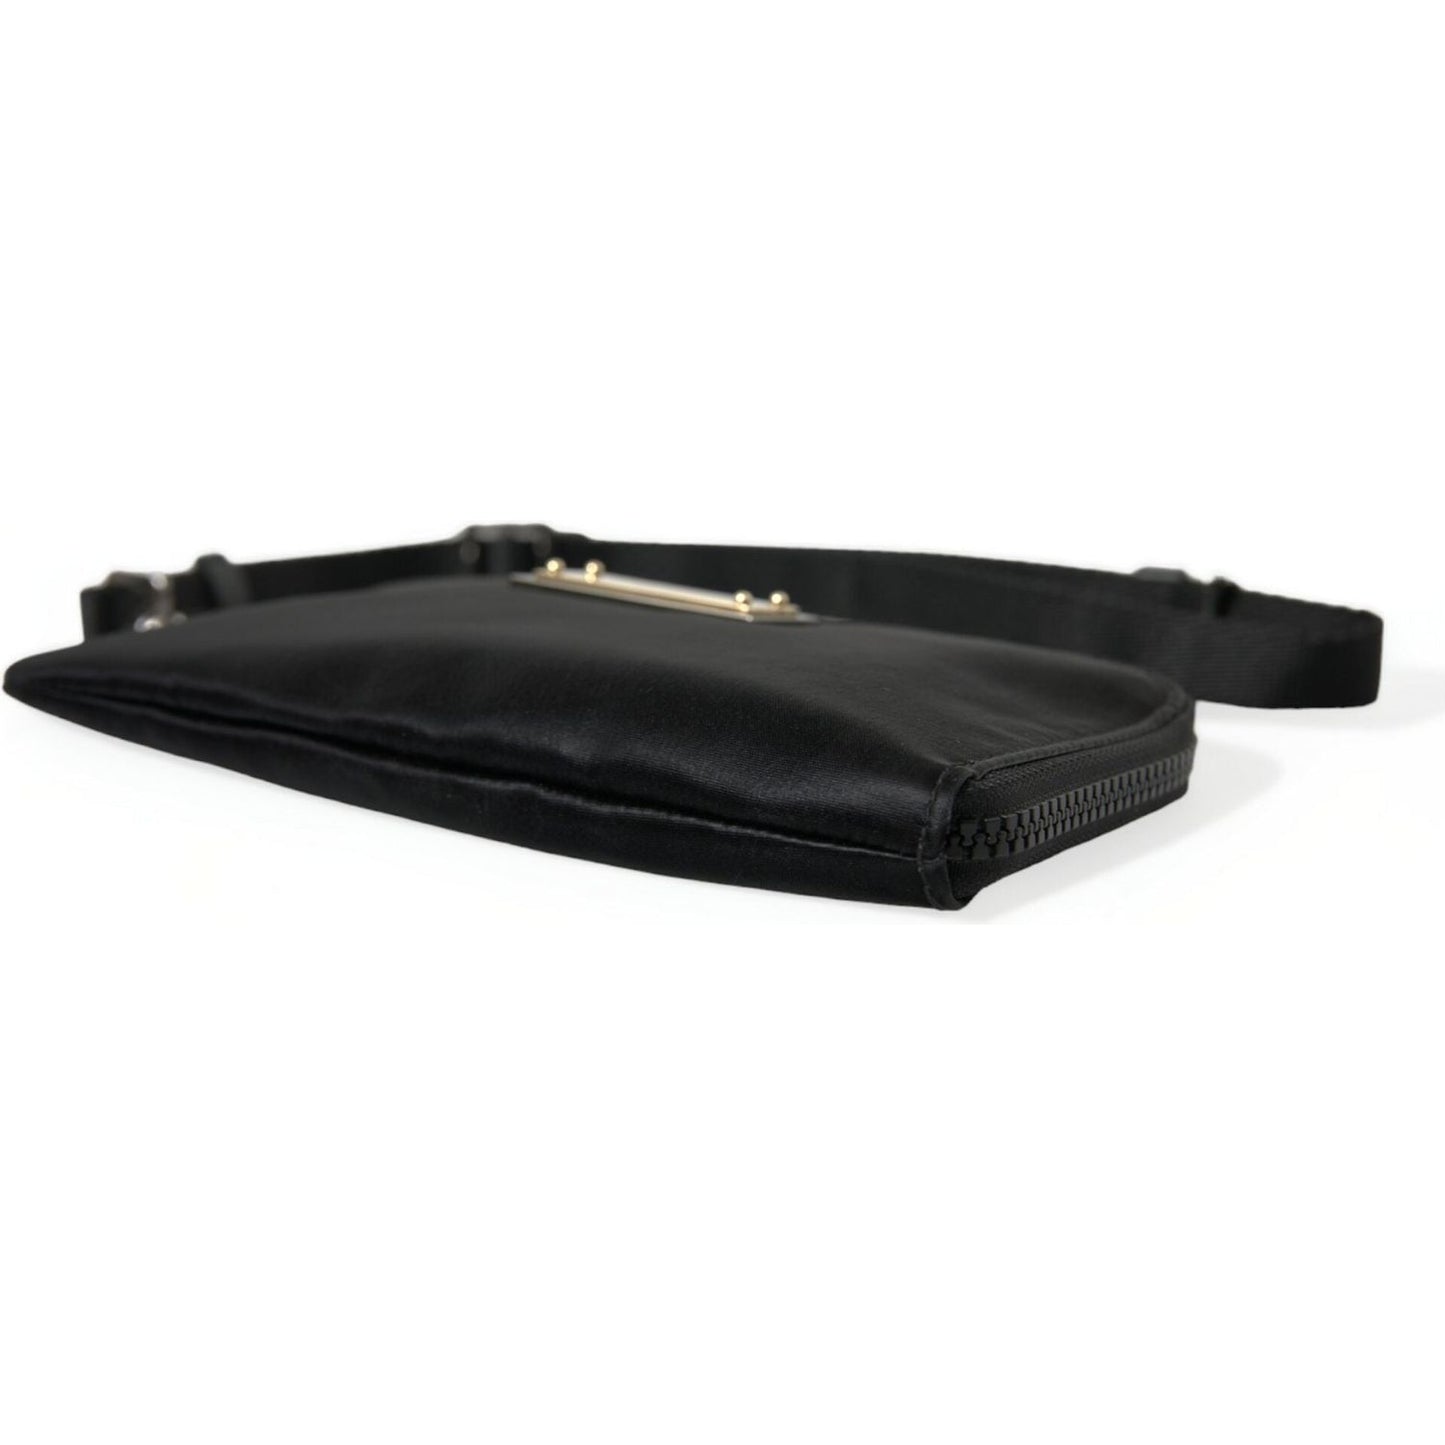 Dolce & GabbanaElegant Black Nylon Leather Pouch with Silver DetailsMcRichard Designer Brands£499.00